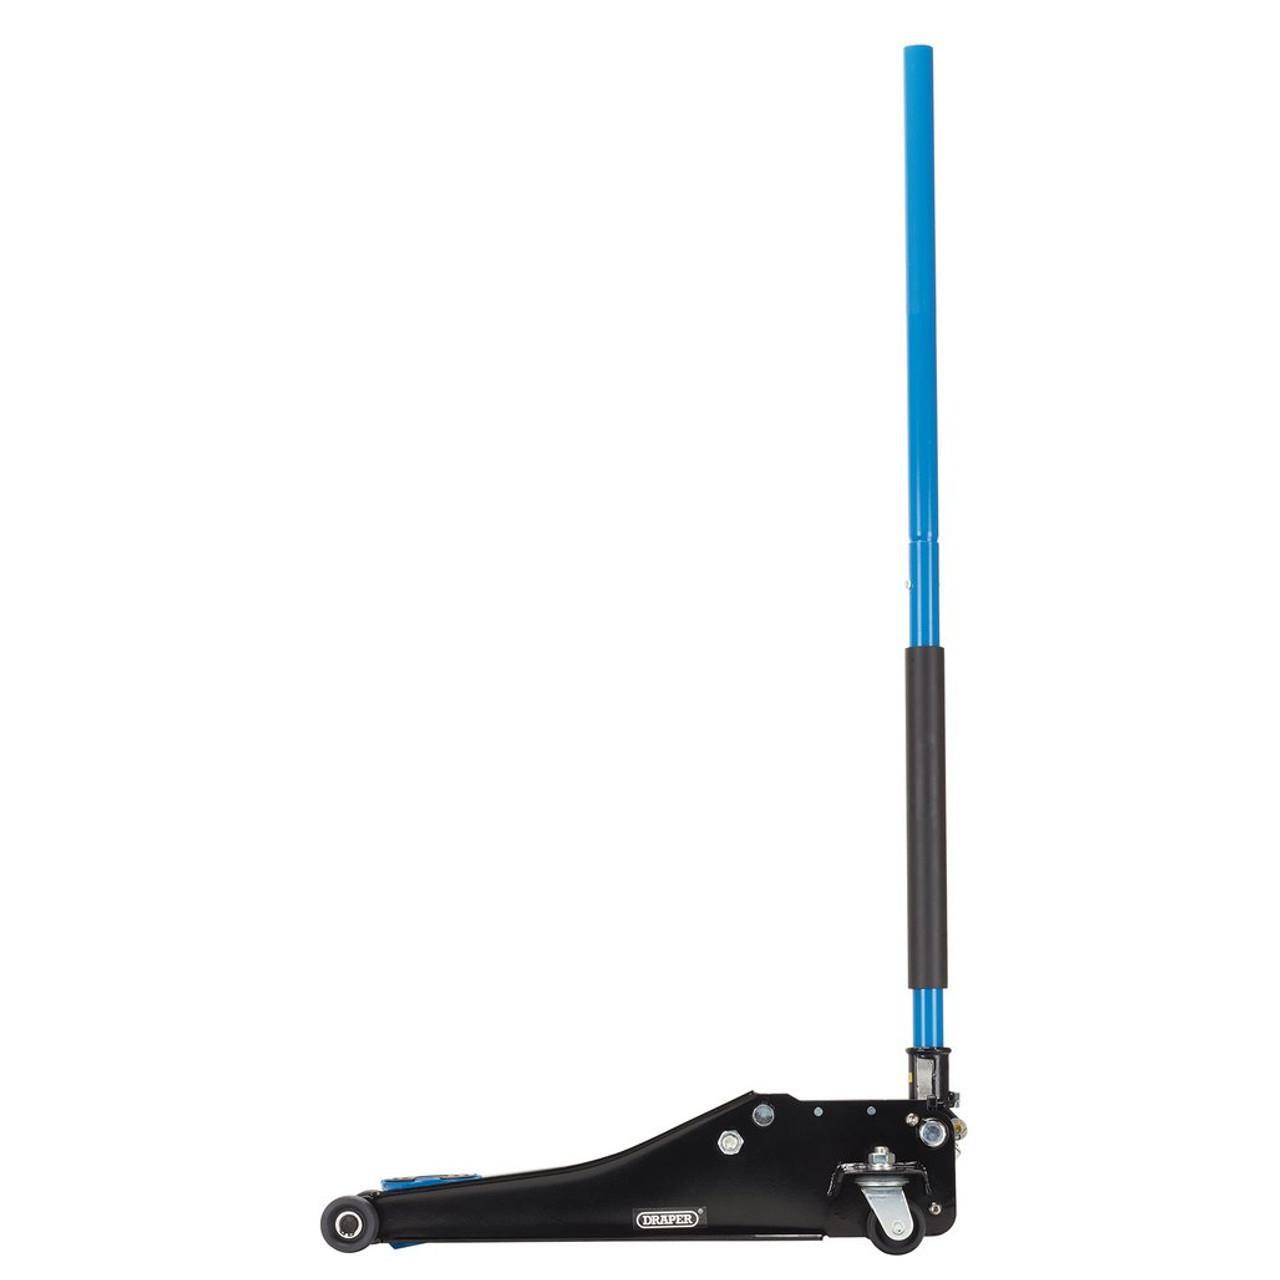 Draper 2.25 Tonne Low Profile Trolley Jack, Blue and Black 28465 - Tools 2U Direct SW